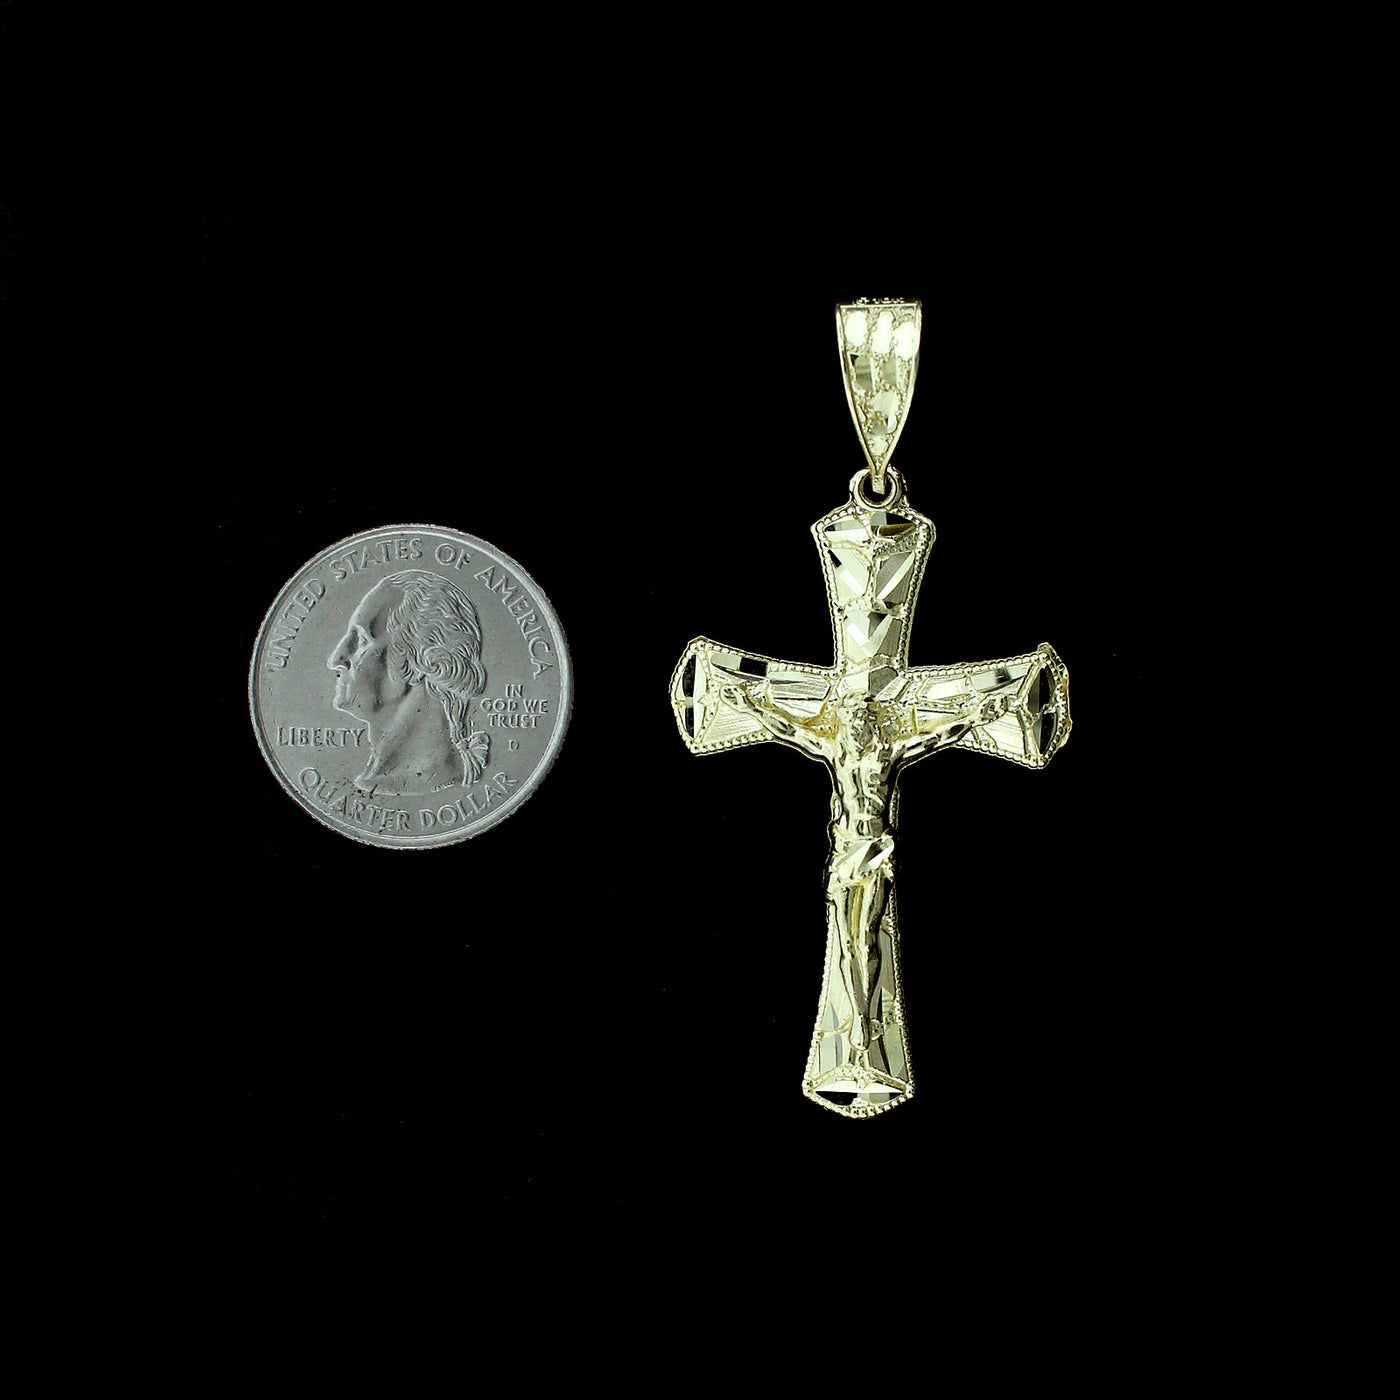 Real 10K Yellow Gold Nugget Cross Pendant Large Diamond Cut Jesus Crucifix Charm